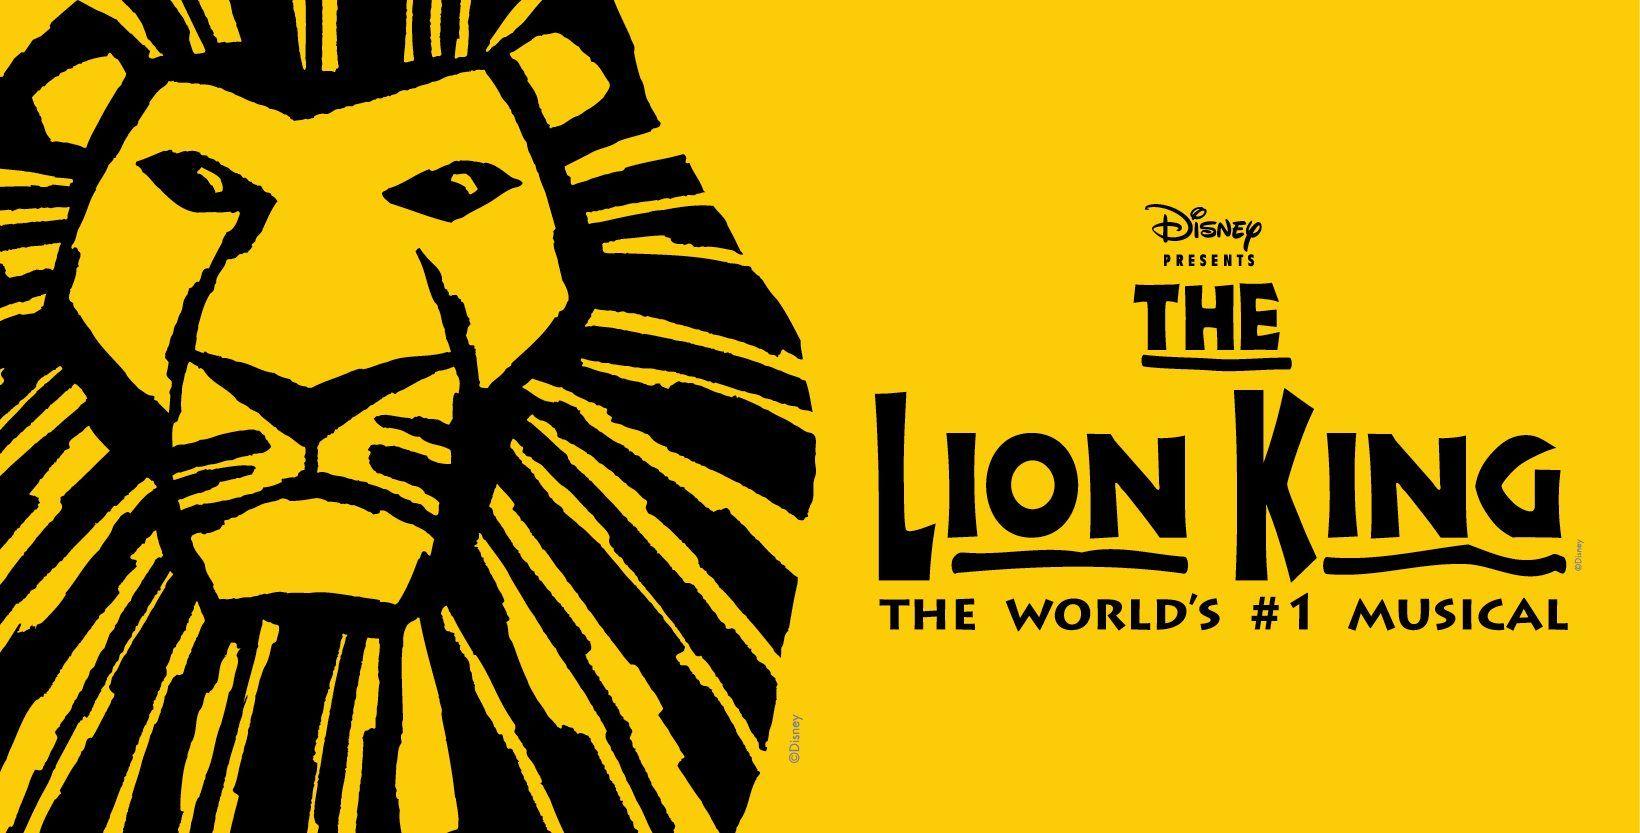 Disney The Lion King Logo - Disney Presents The Lion King Convention Center